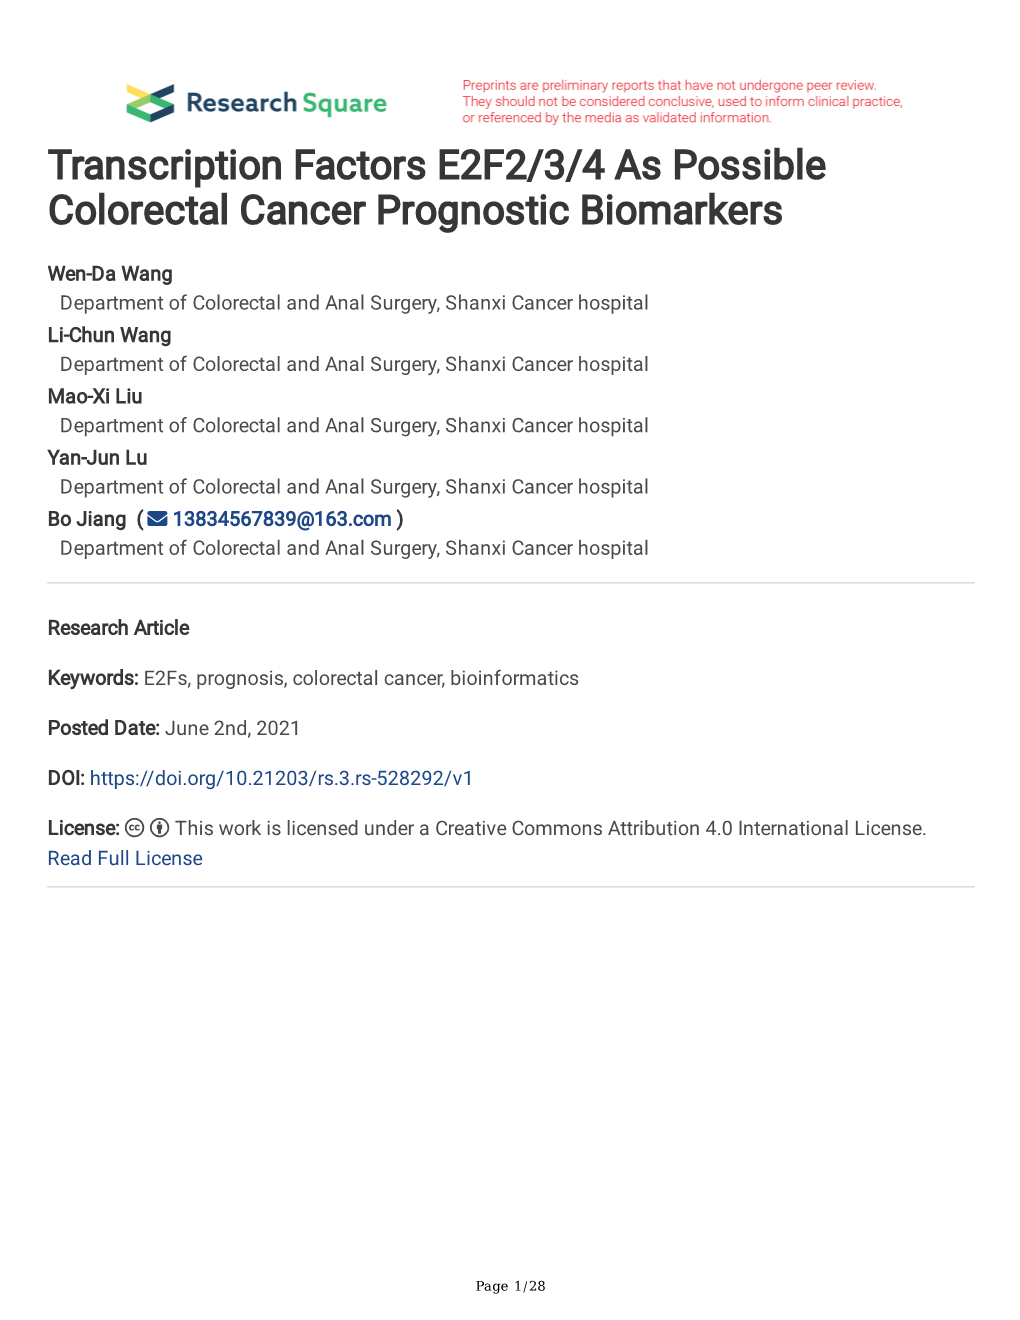 Transcription Factors E2F2/3/4 As Possible Colorectal Cancer Prognostic Biomarkers